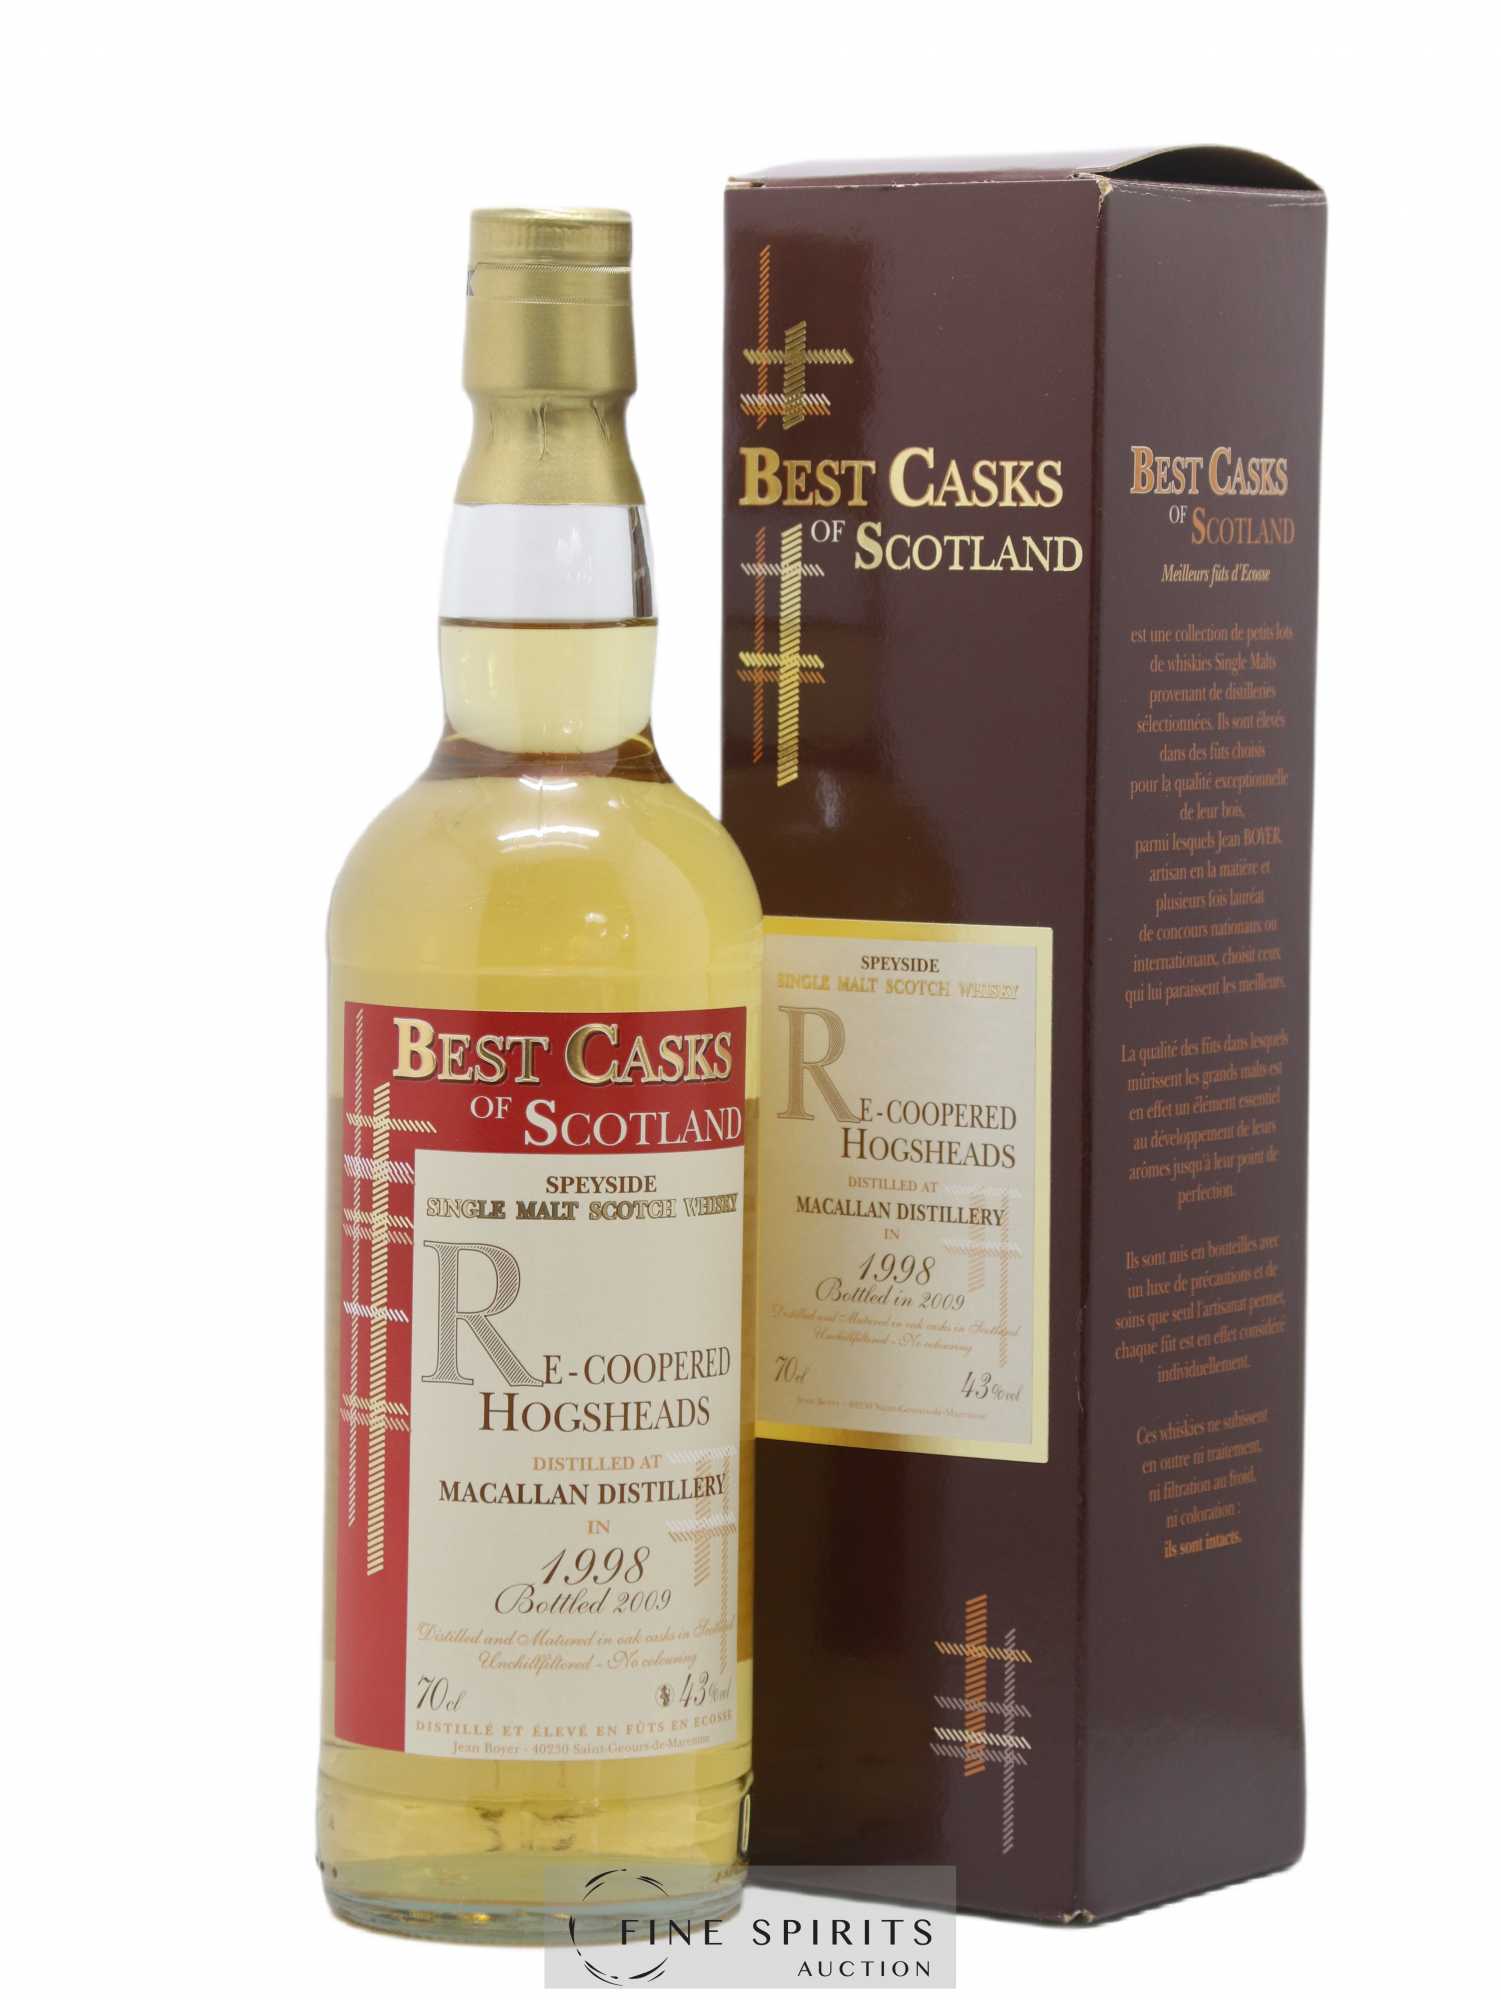 Macallan (The) 1998 Jean Boyer Re-Coopered Hogsheads bottled 2009 Best Casks of Scotland